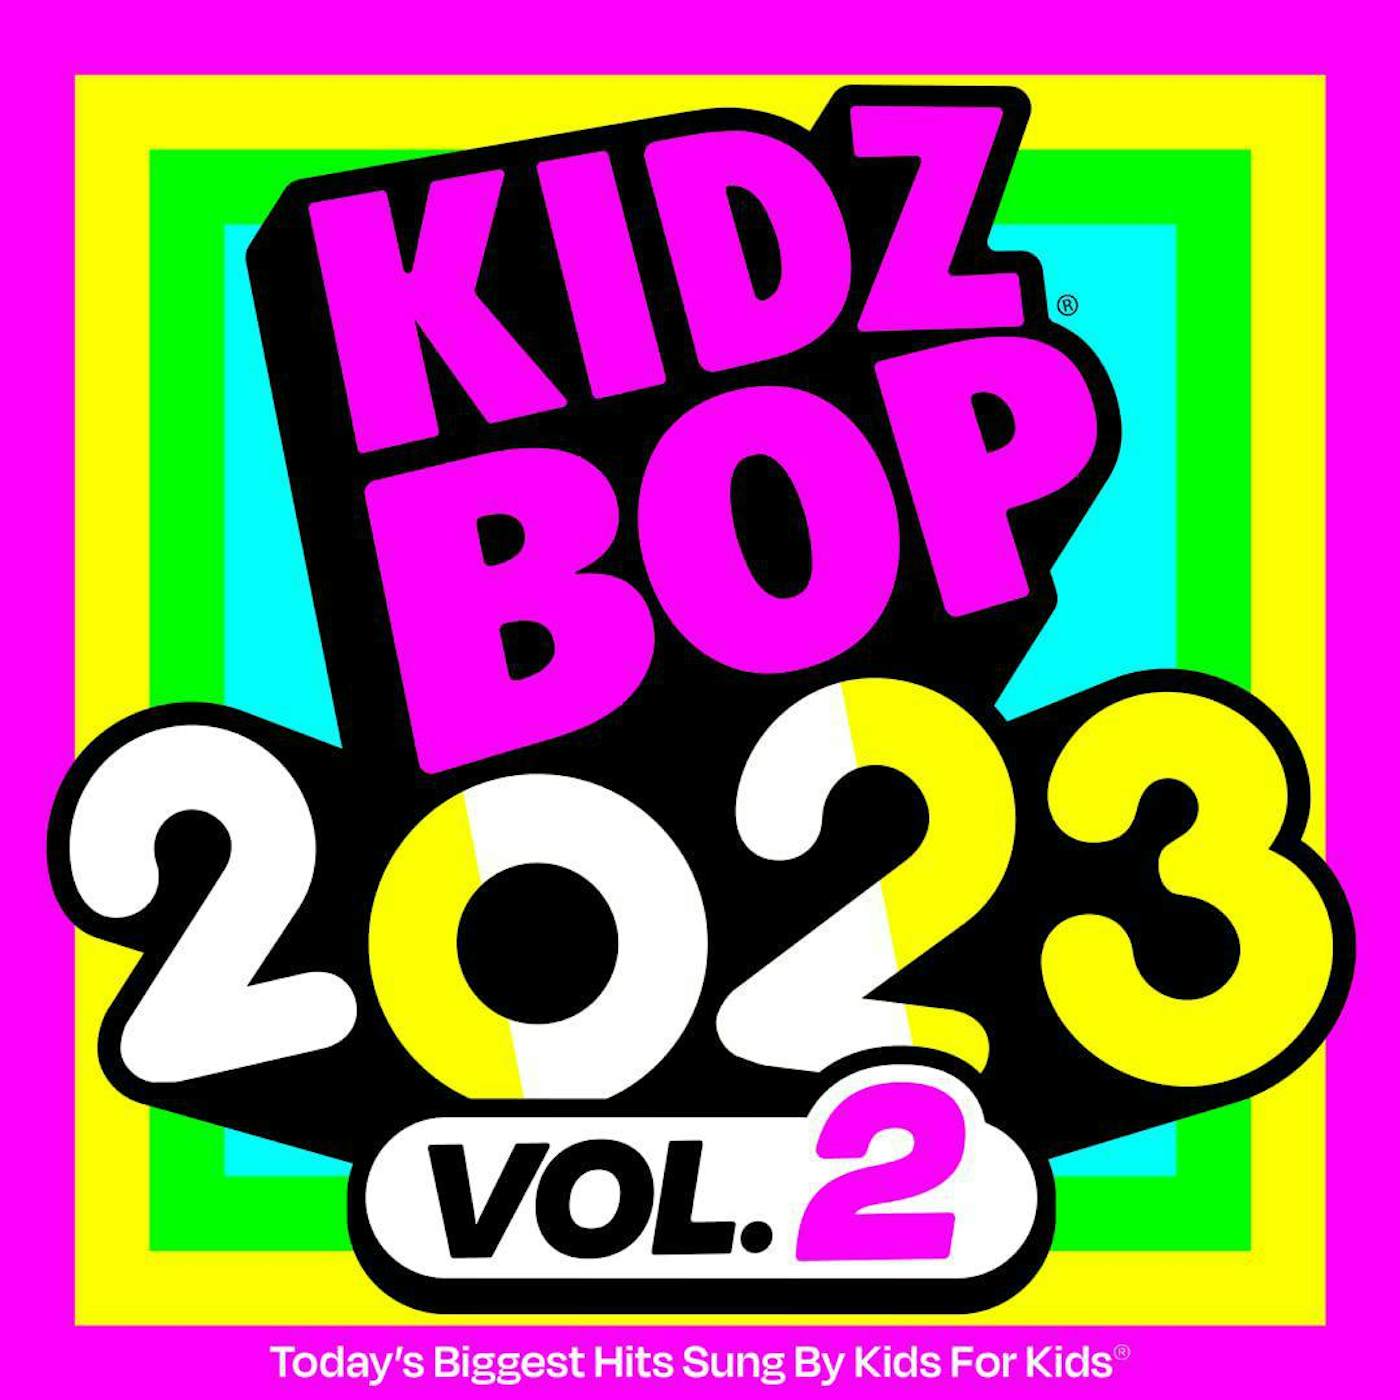 Kidz Bop 2023 Vol 2 Vinyl Record